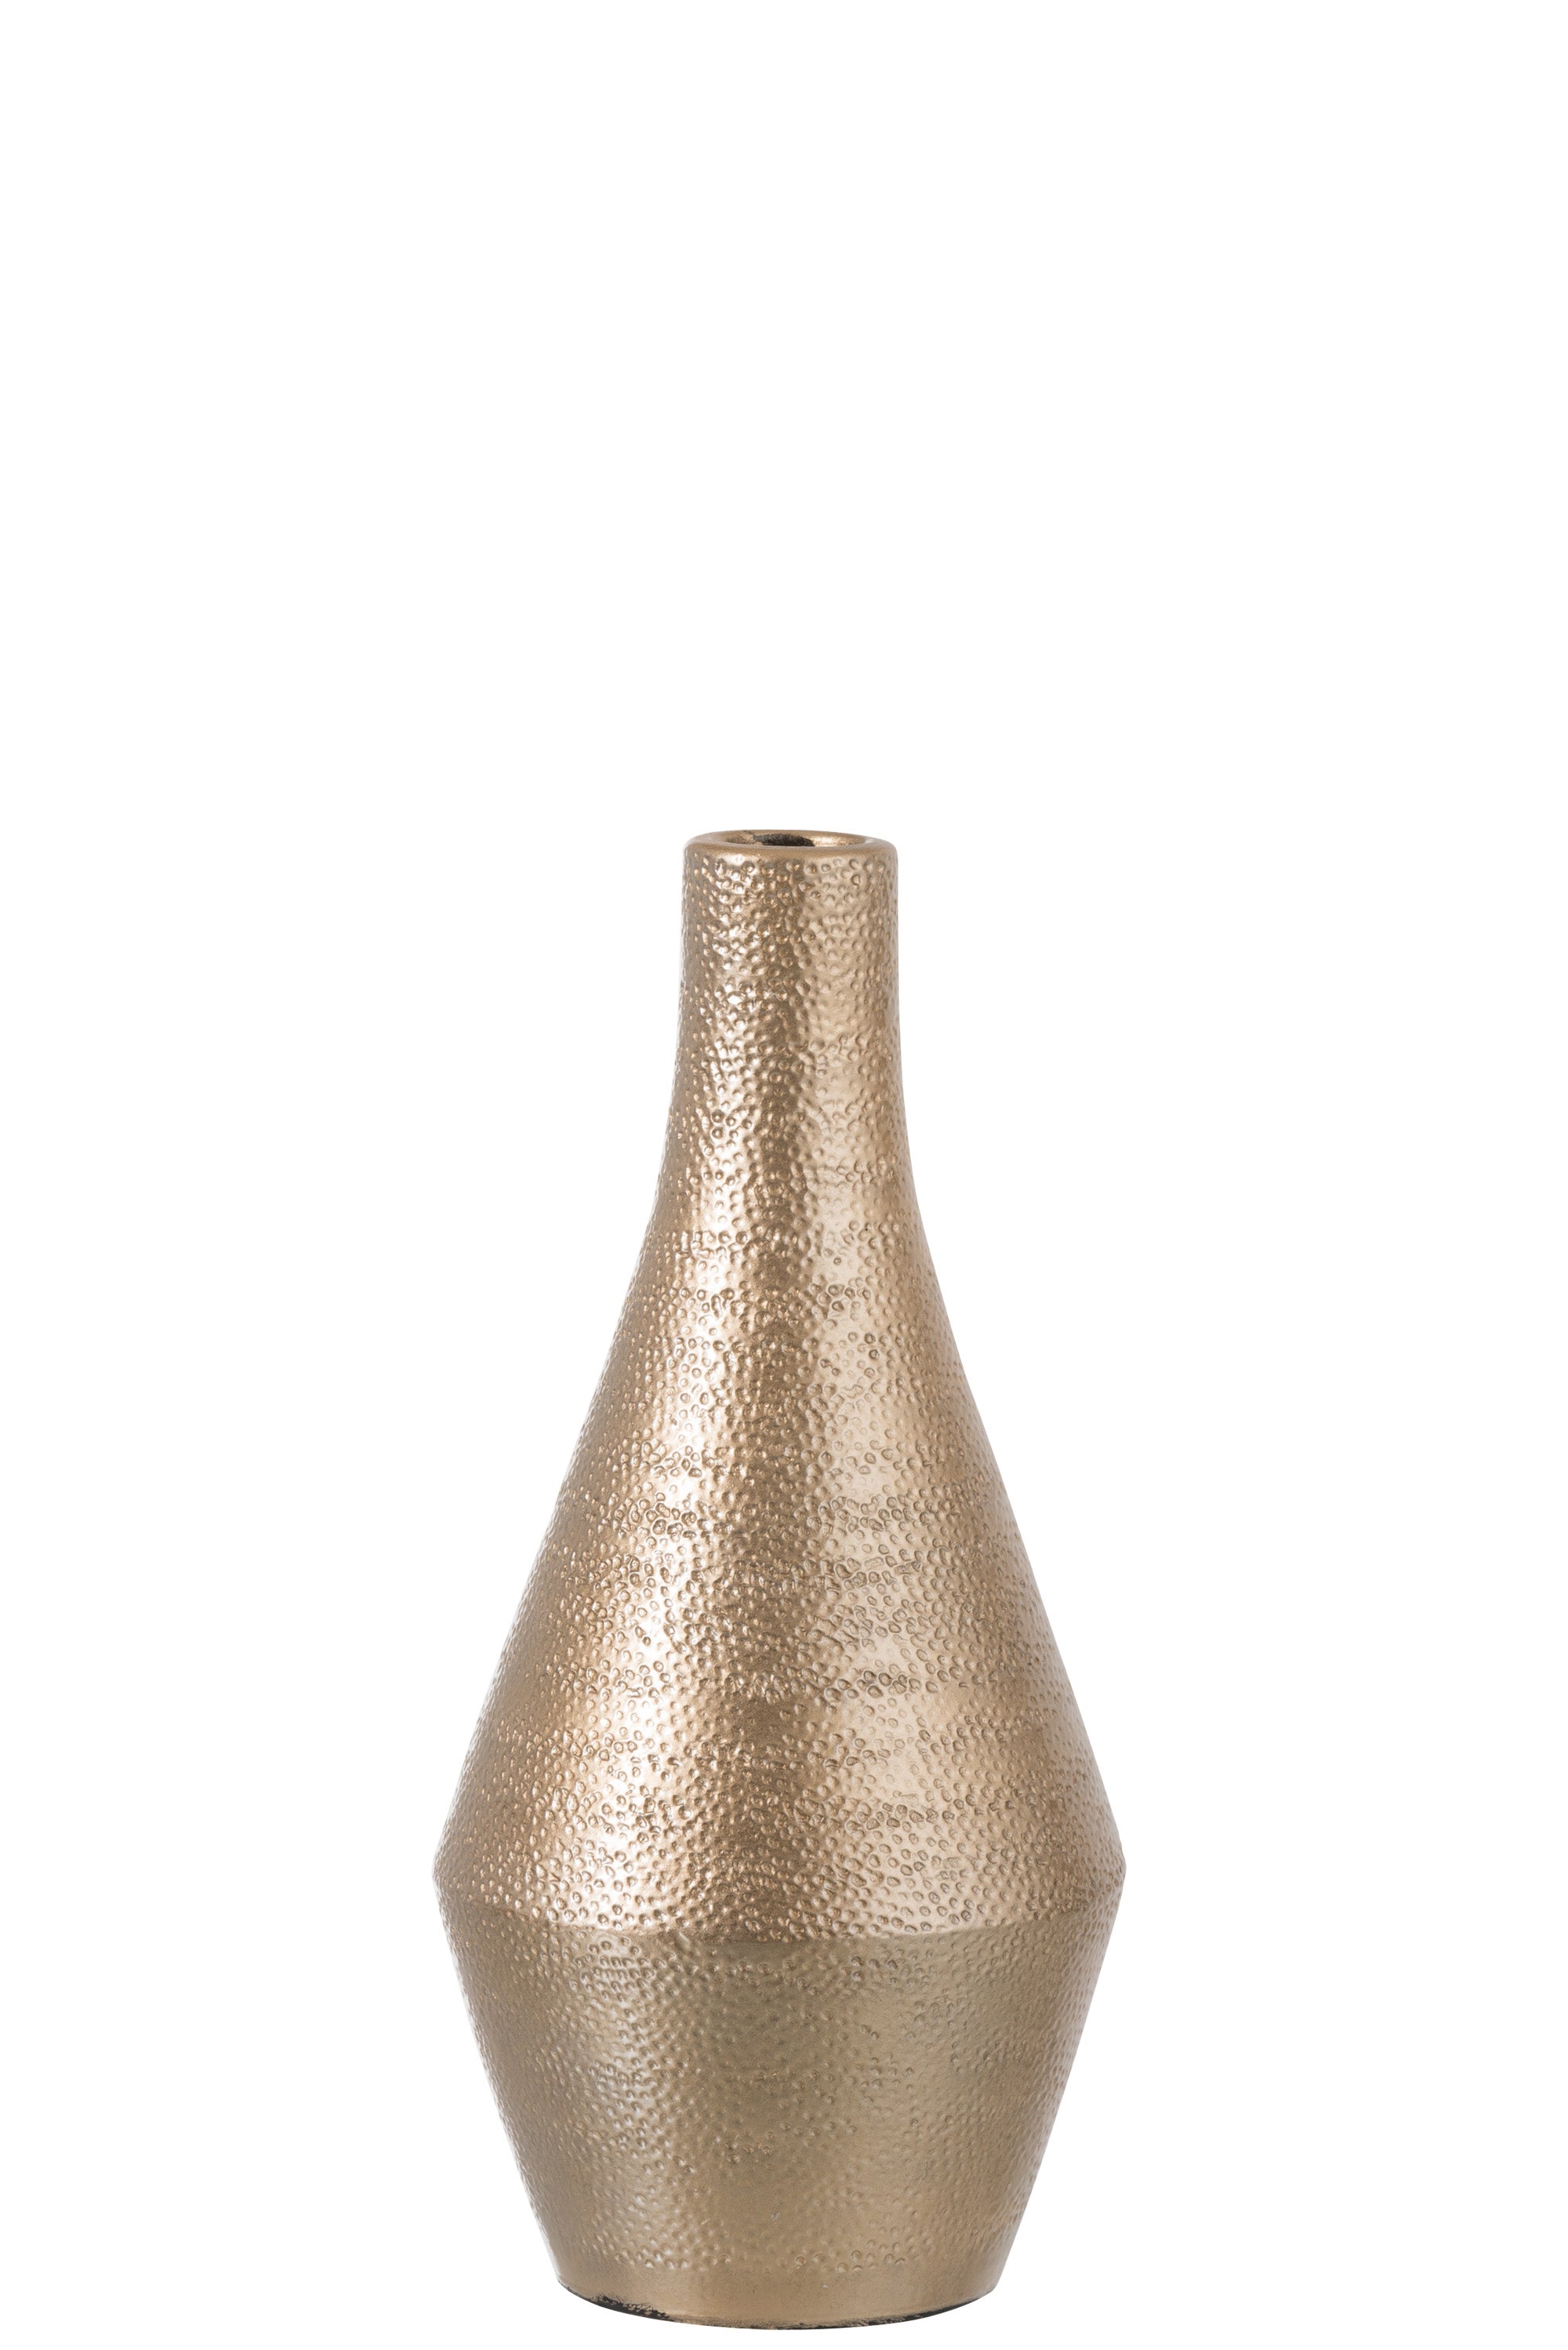 Vase Muster Terrakotta Gold Klein - (88705)